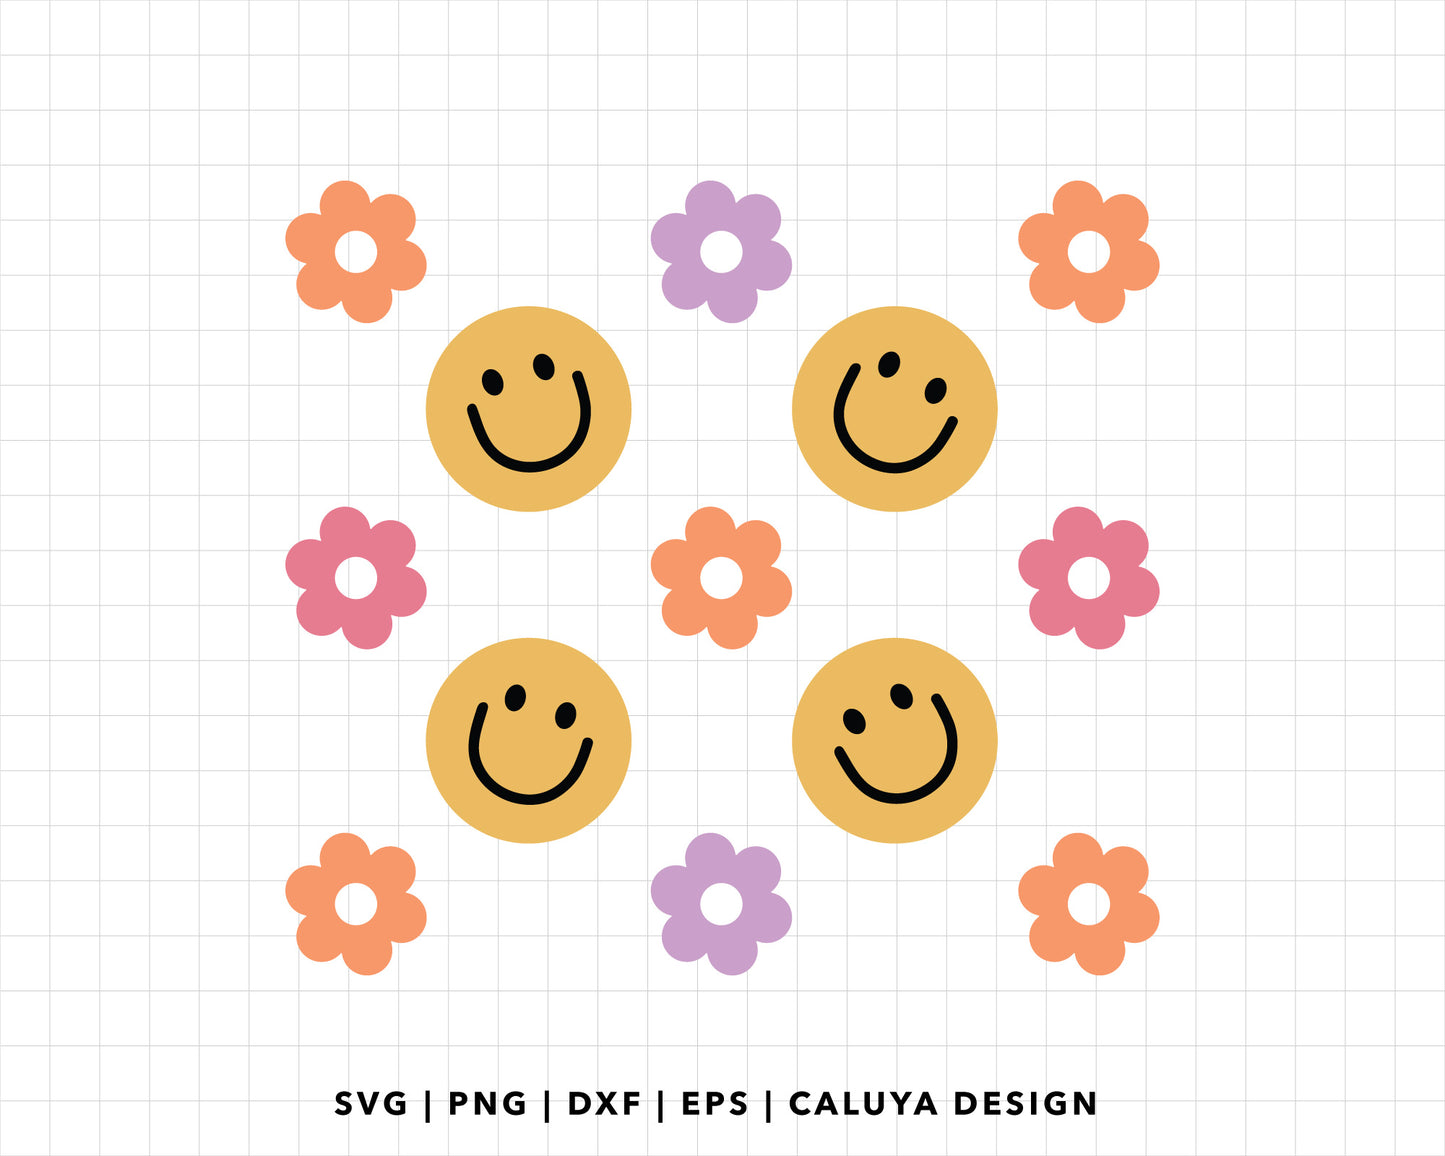 FREE Cute Smiley Face SVG | Retro Flower SVG Cut File for Cricut, Cameo Silhouette | Free SVG Cut File